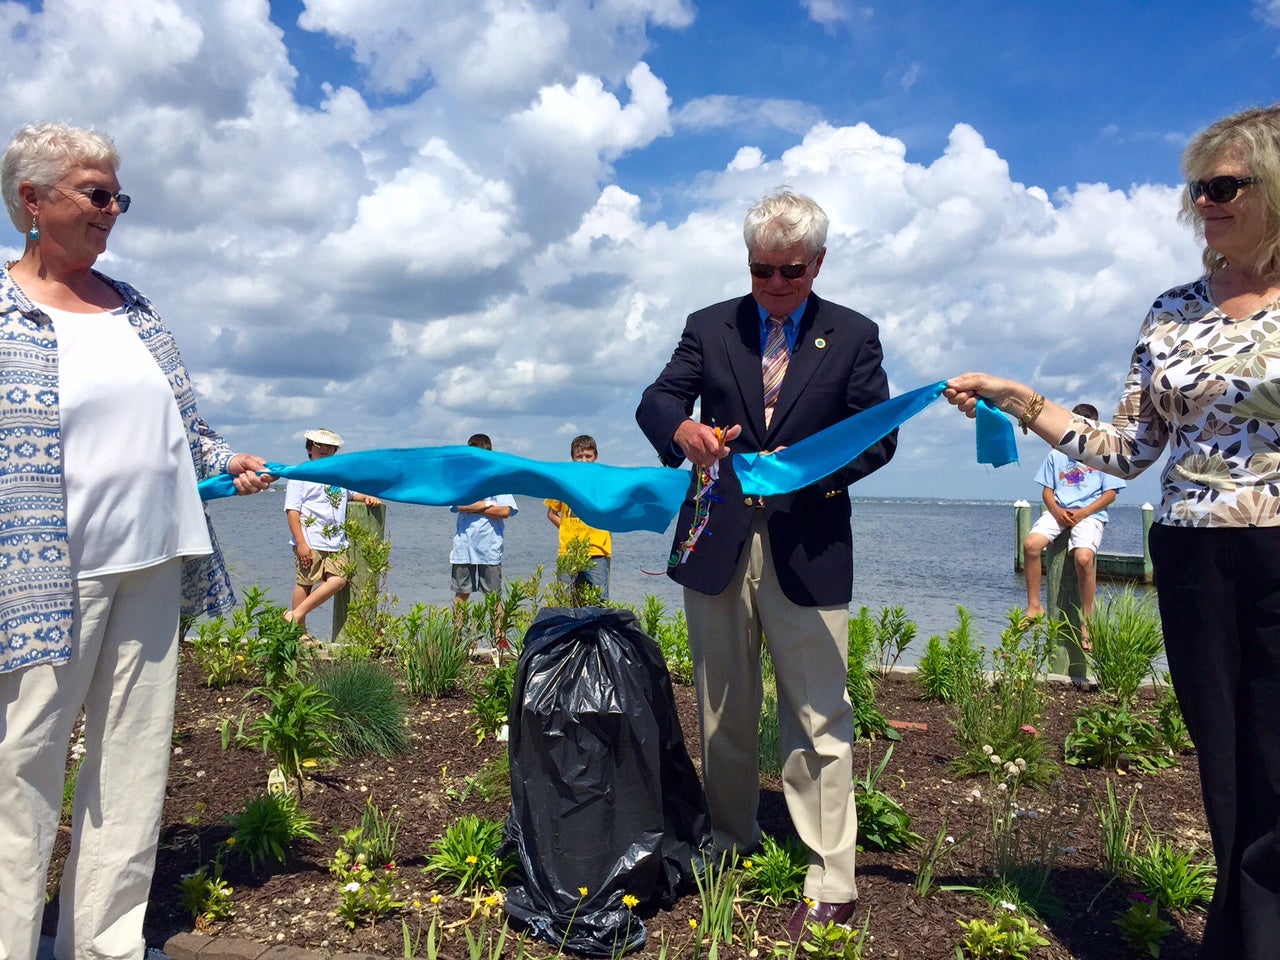  Seaside Park Mayor Robert W. Matthies cut the blue ribbon in the borough's 